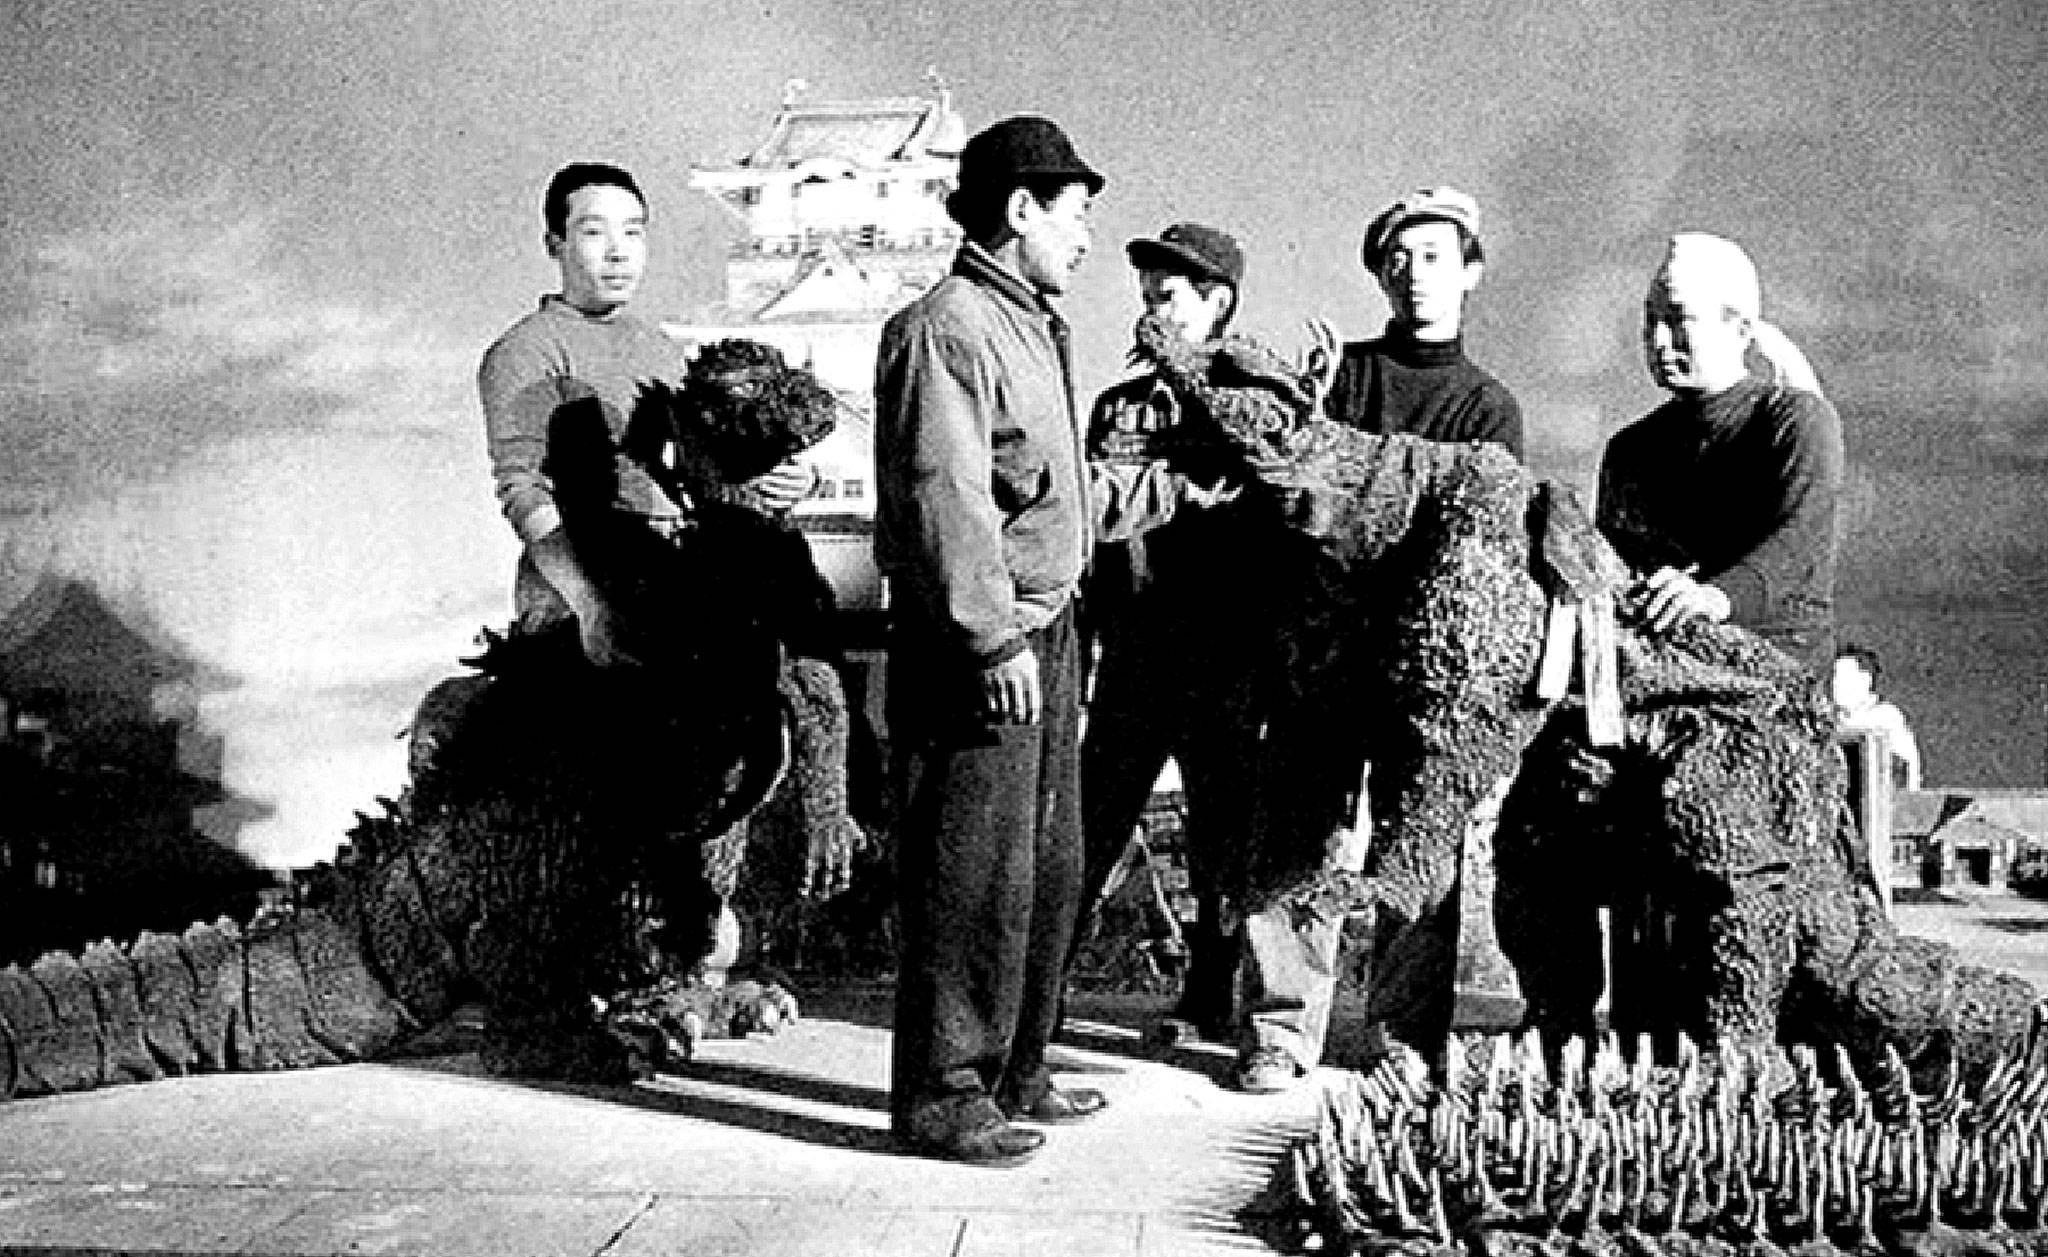 Suit fitting on the set of “Godzilla Raids Again” (1955), with Haruo Nakajima (left) portraying Godzilla. (Wikimedia Commons)